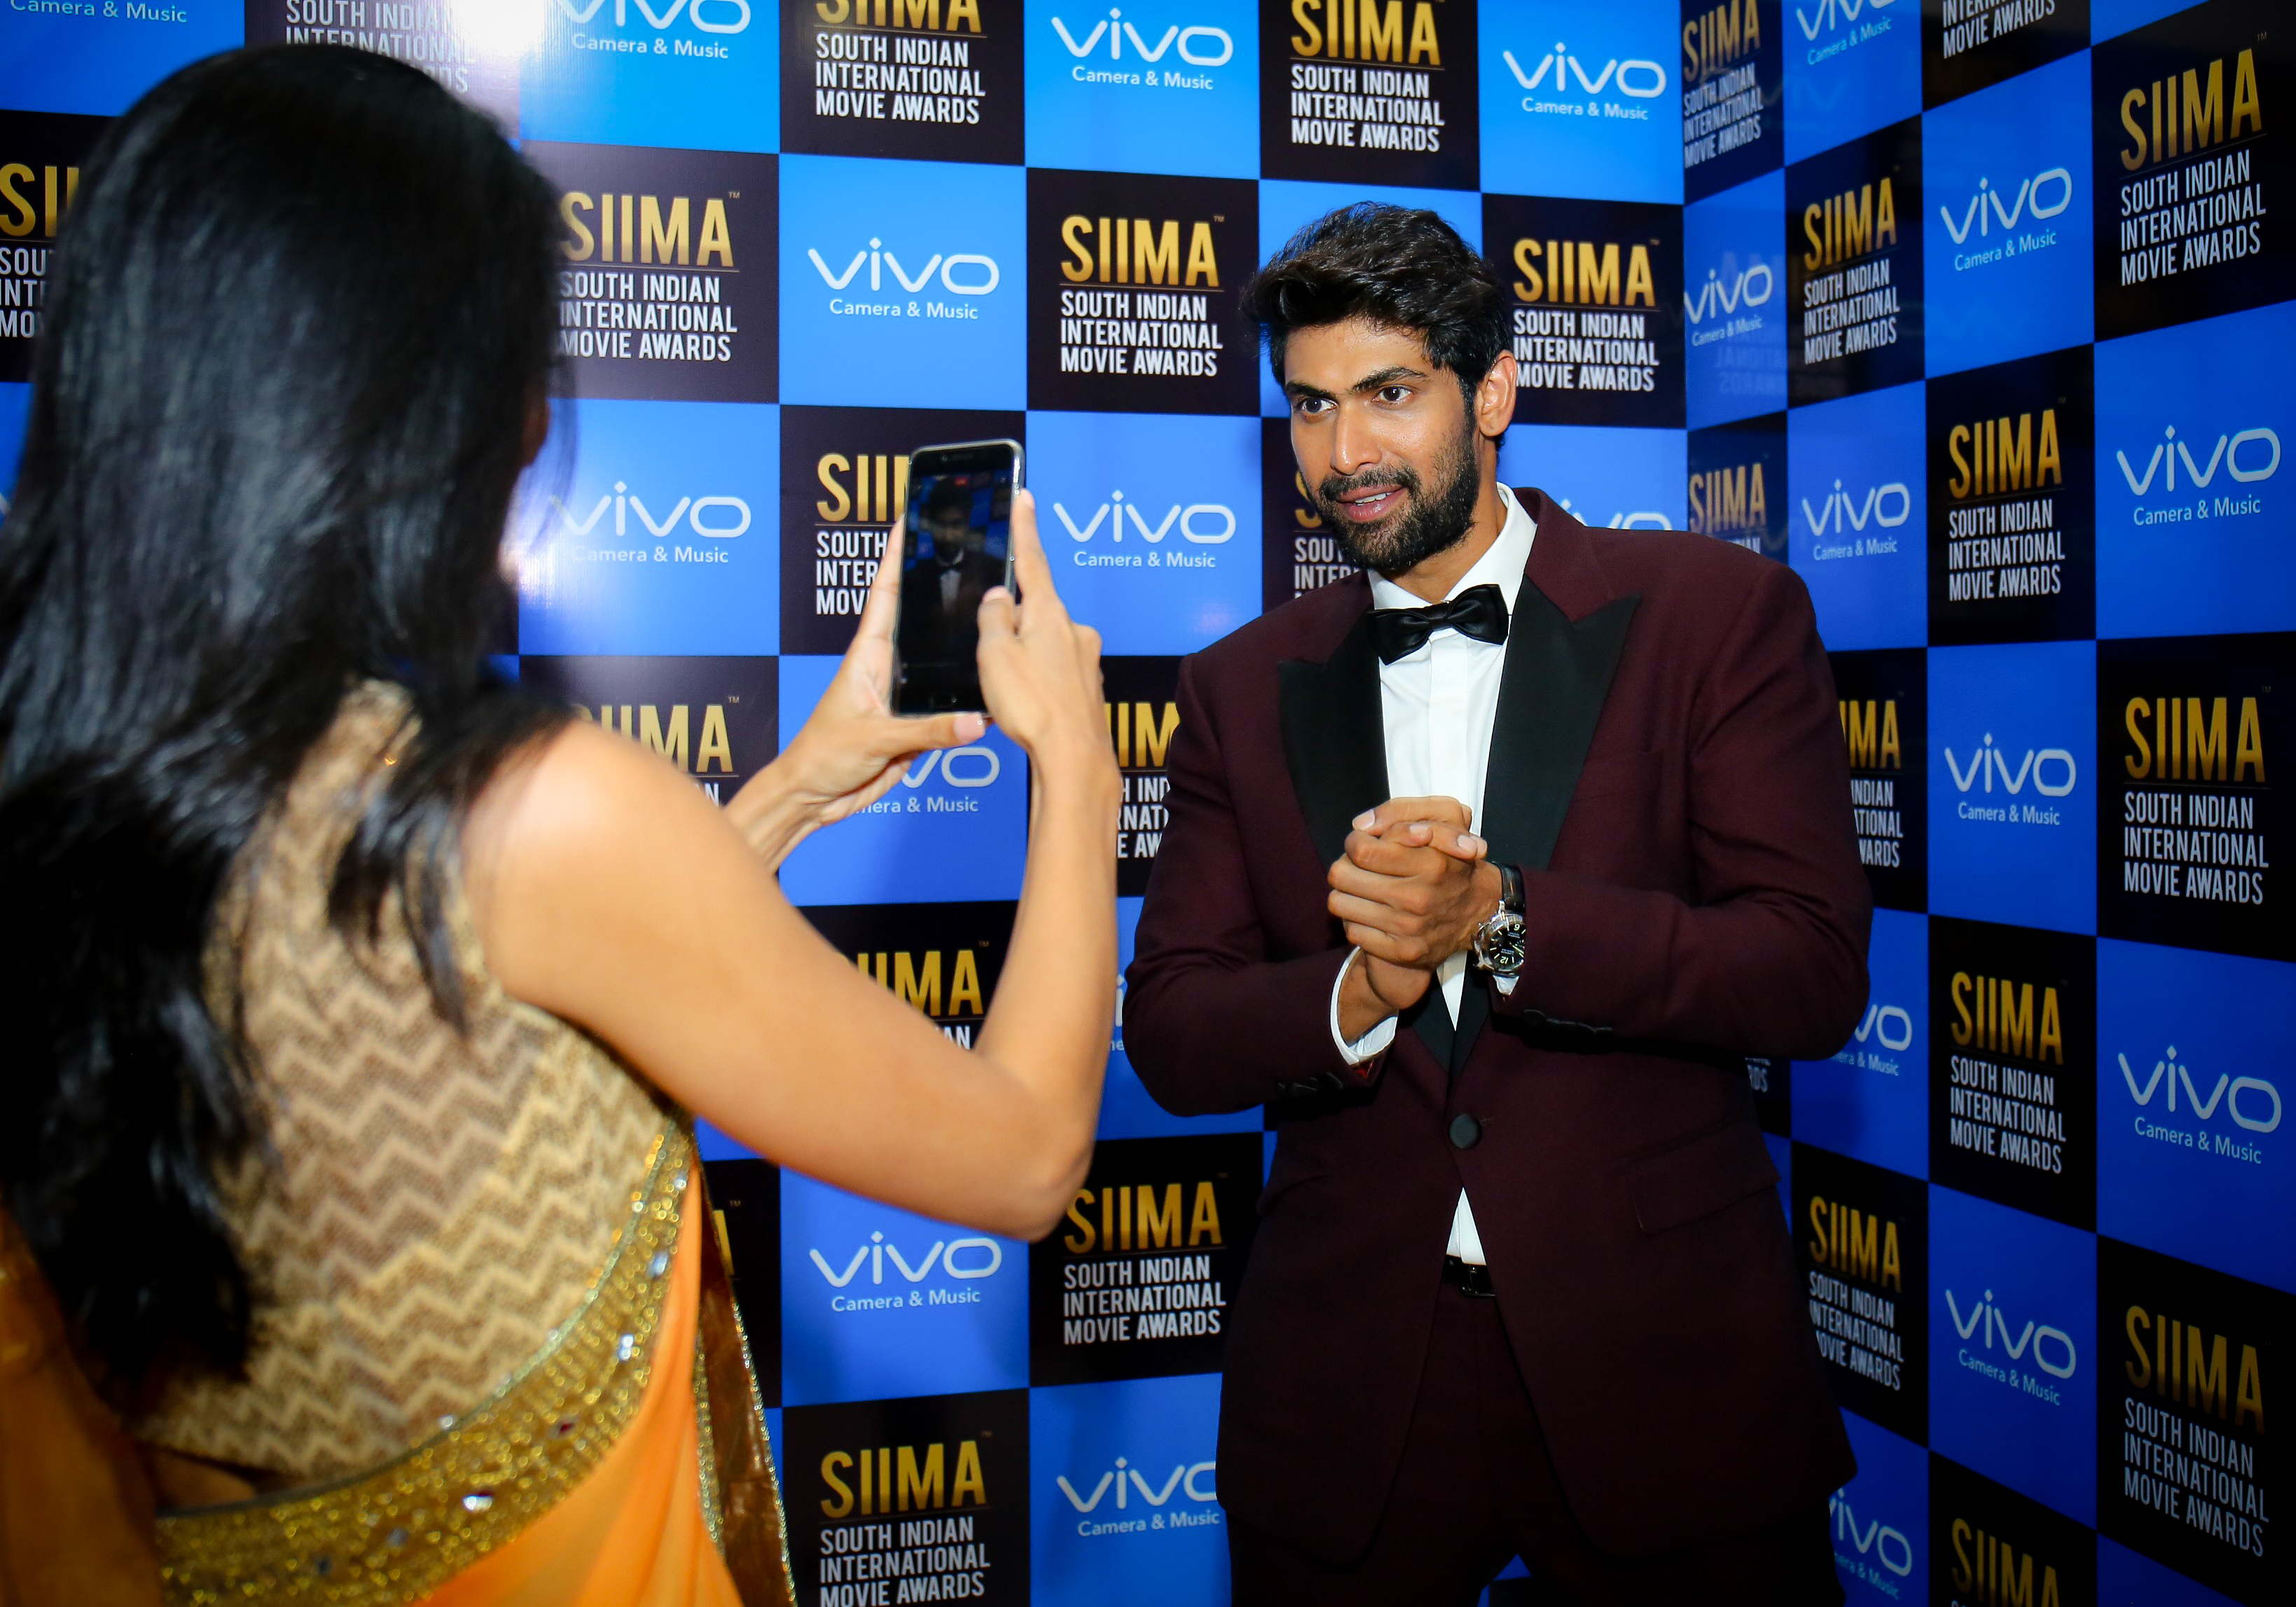 The South Indian International Movie Awards (SIIMA)